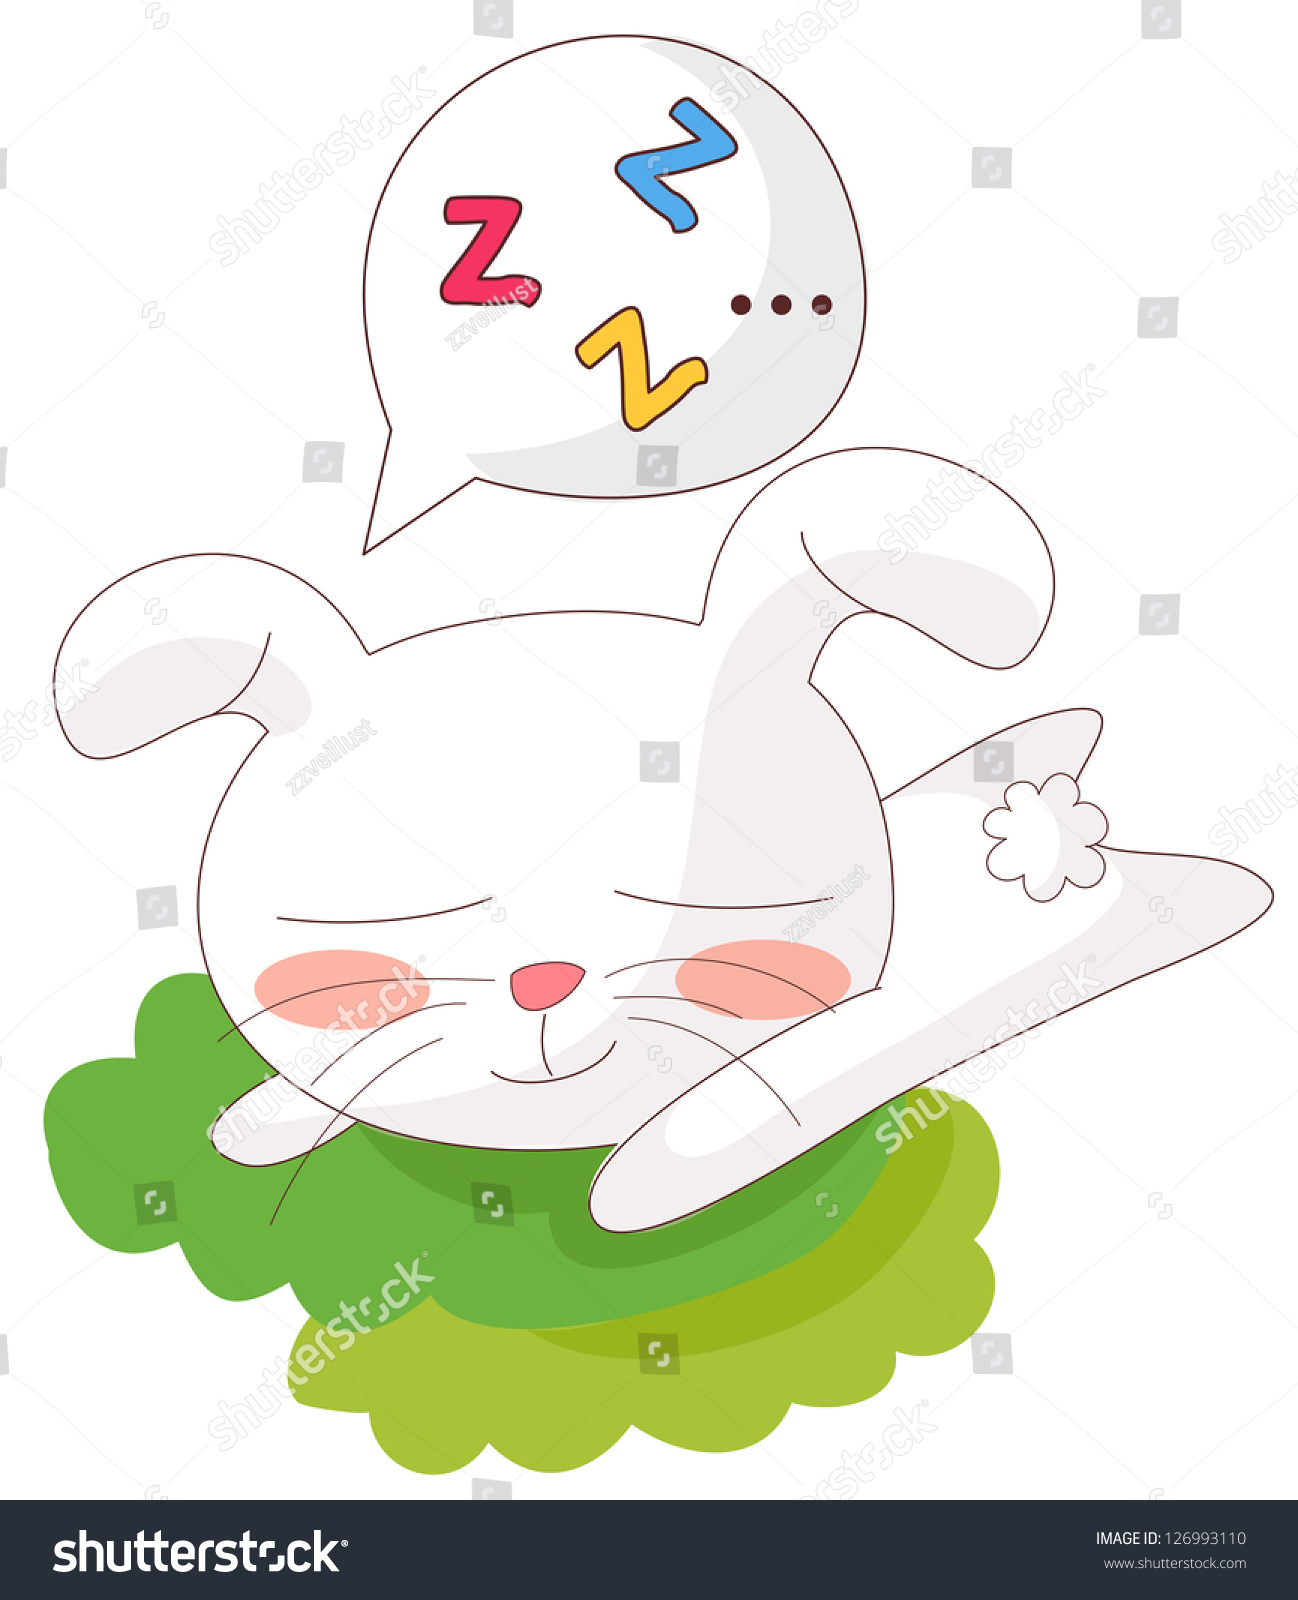 A Vector Illustration Of A Sleeping Bunny - 126993110 : Shutterstock